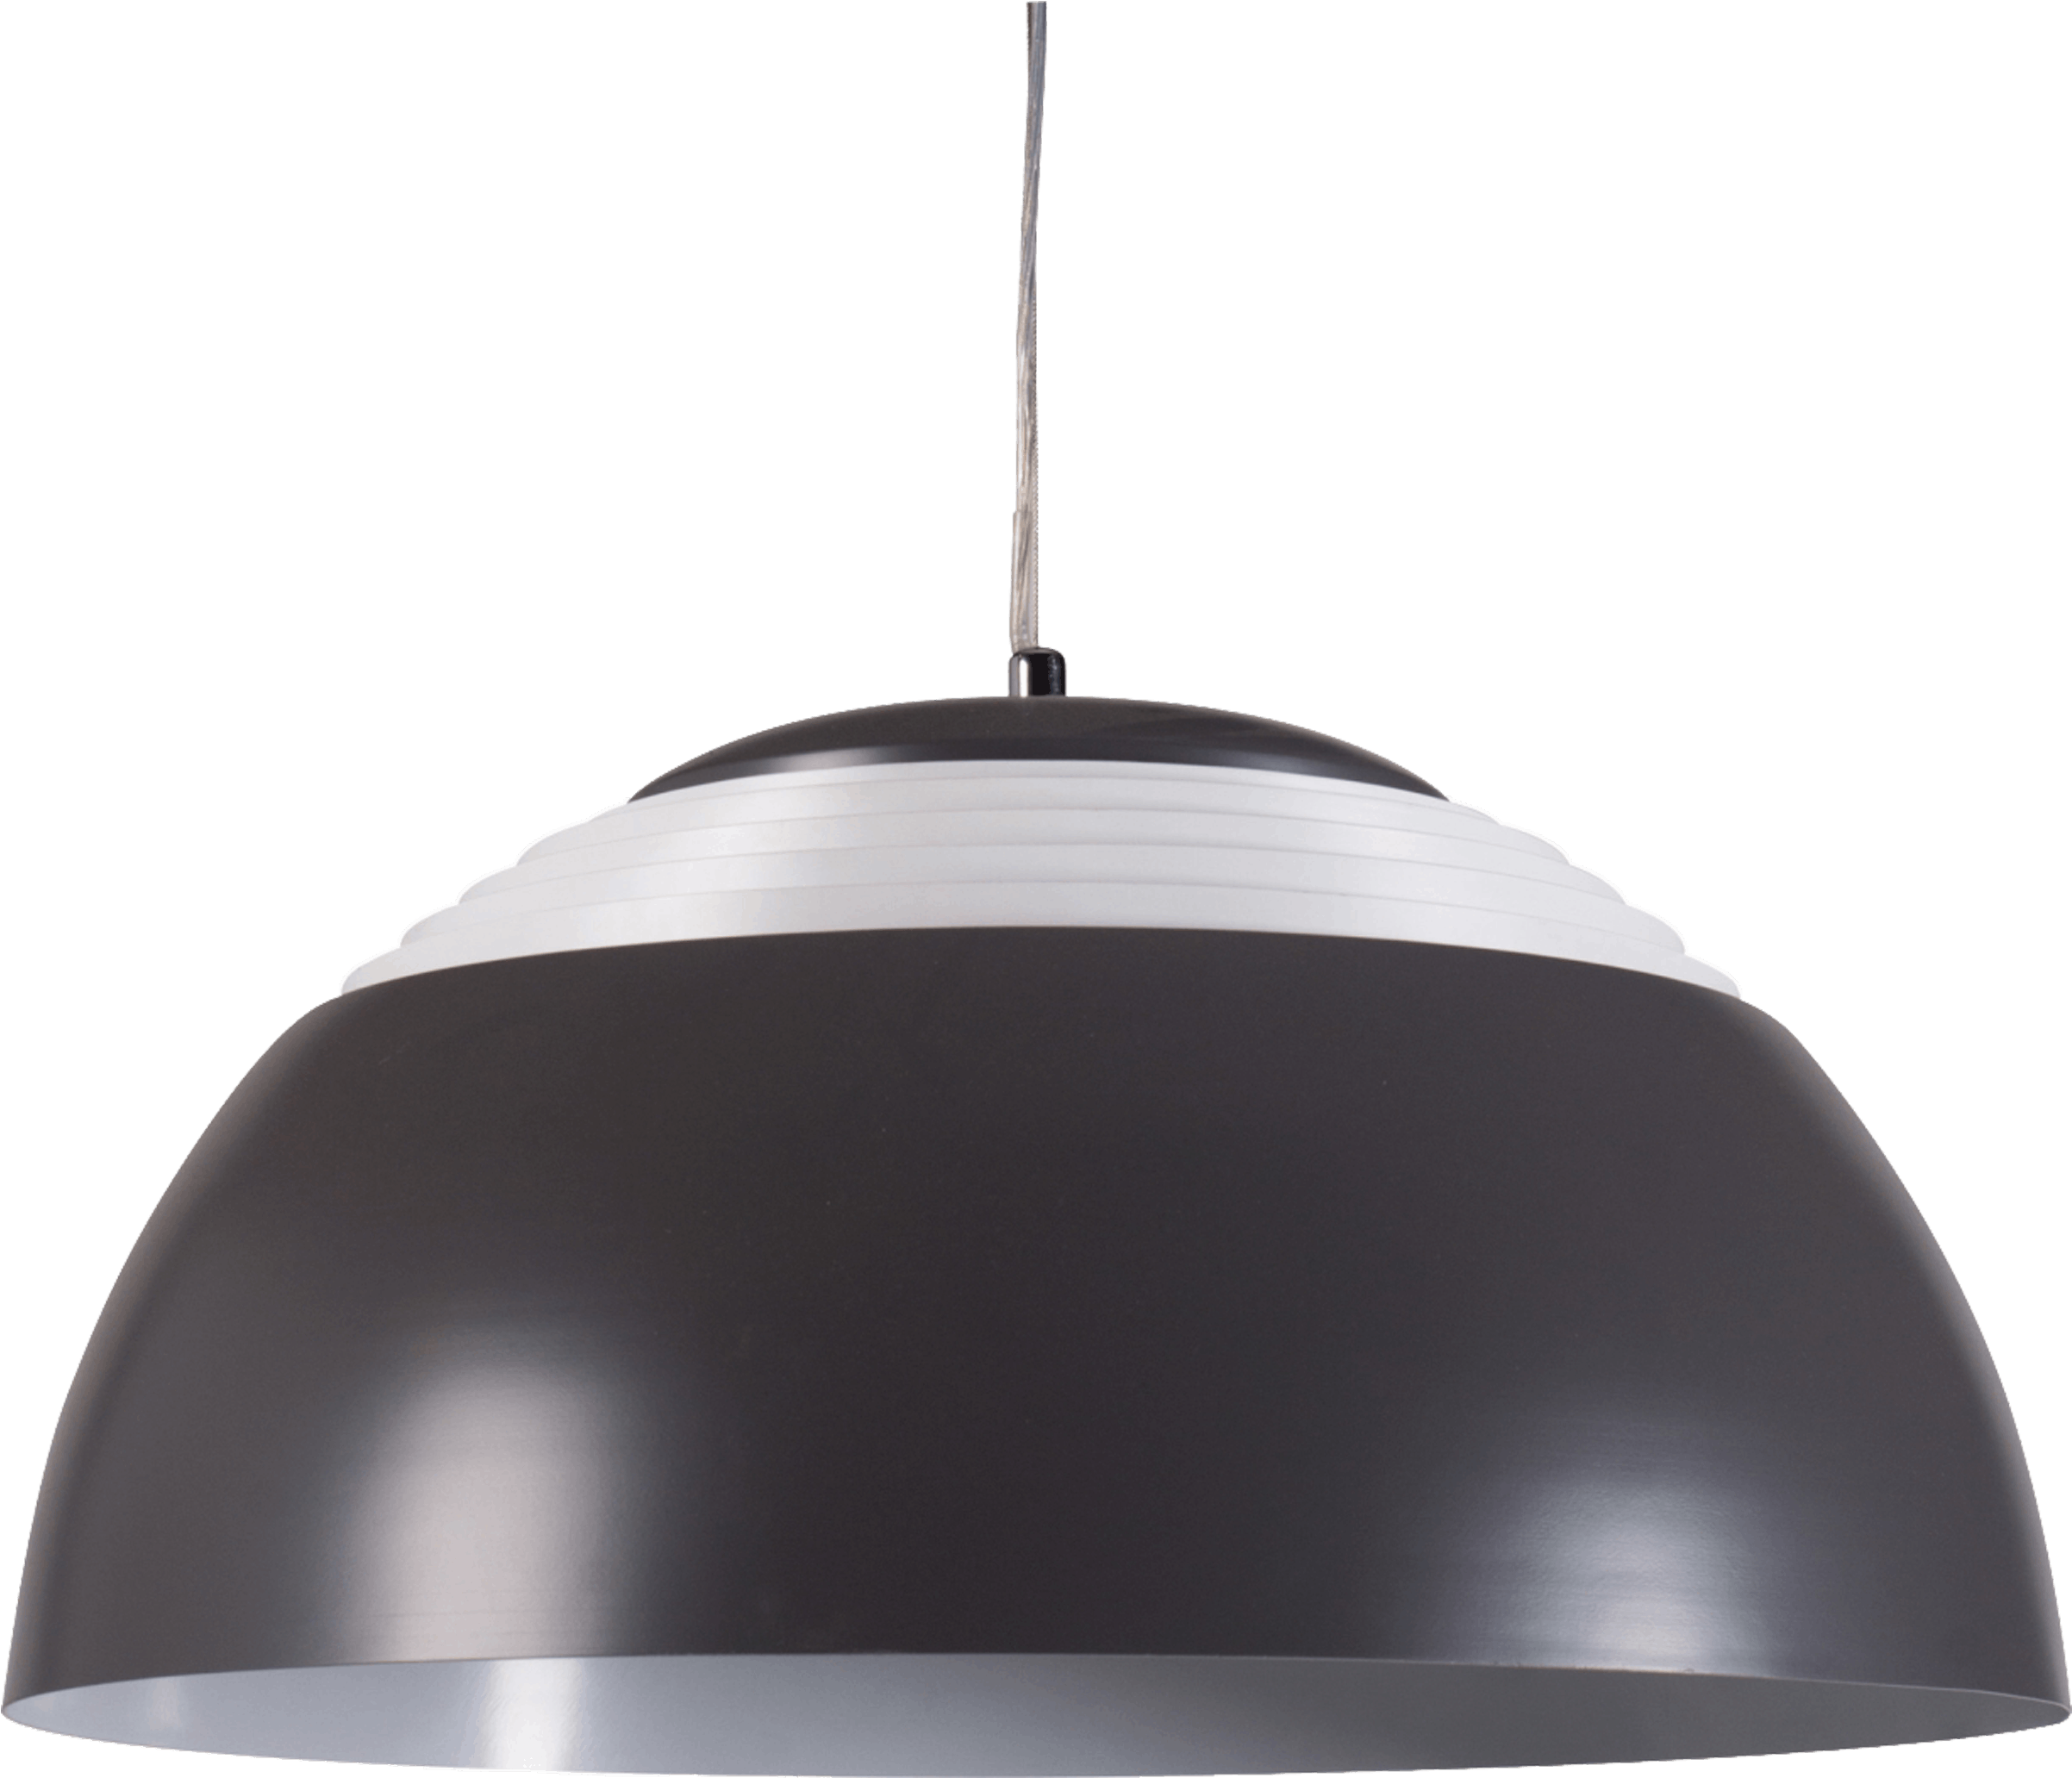 Download PNG image - Hanging Lamp PNG Transparent Image 